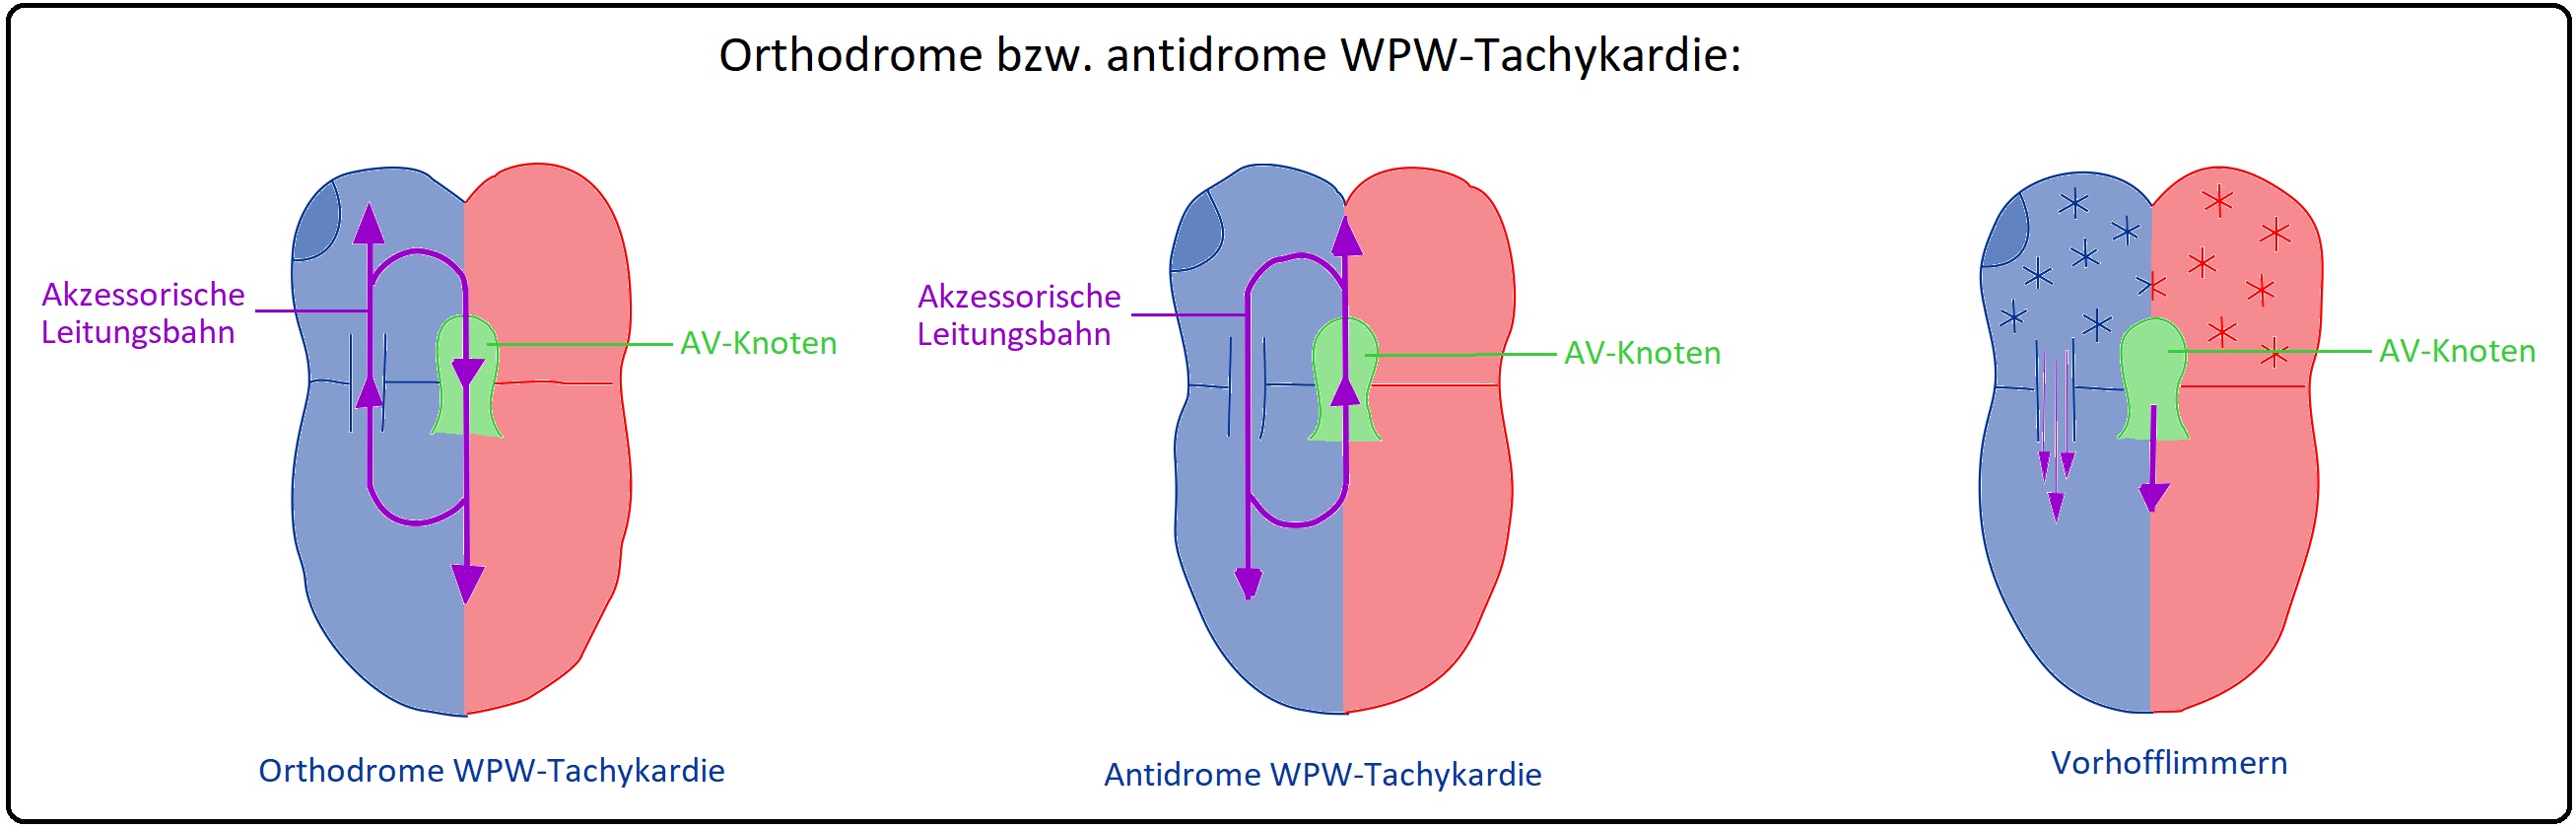 770 Orthodrome bzw. antidrome WPW Tachykardie